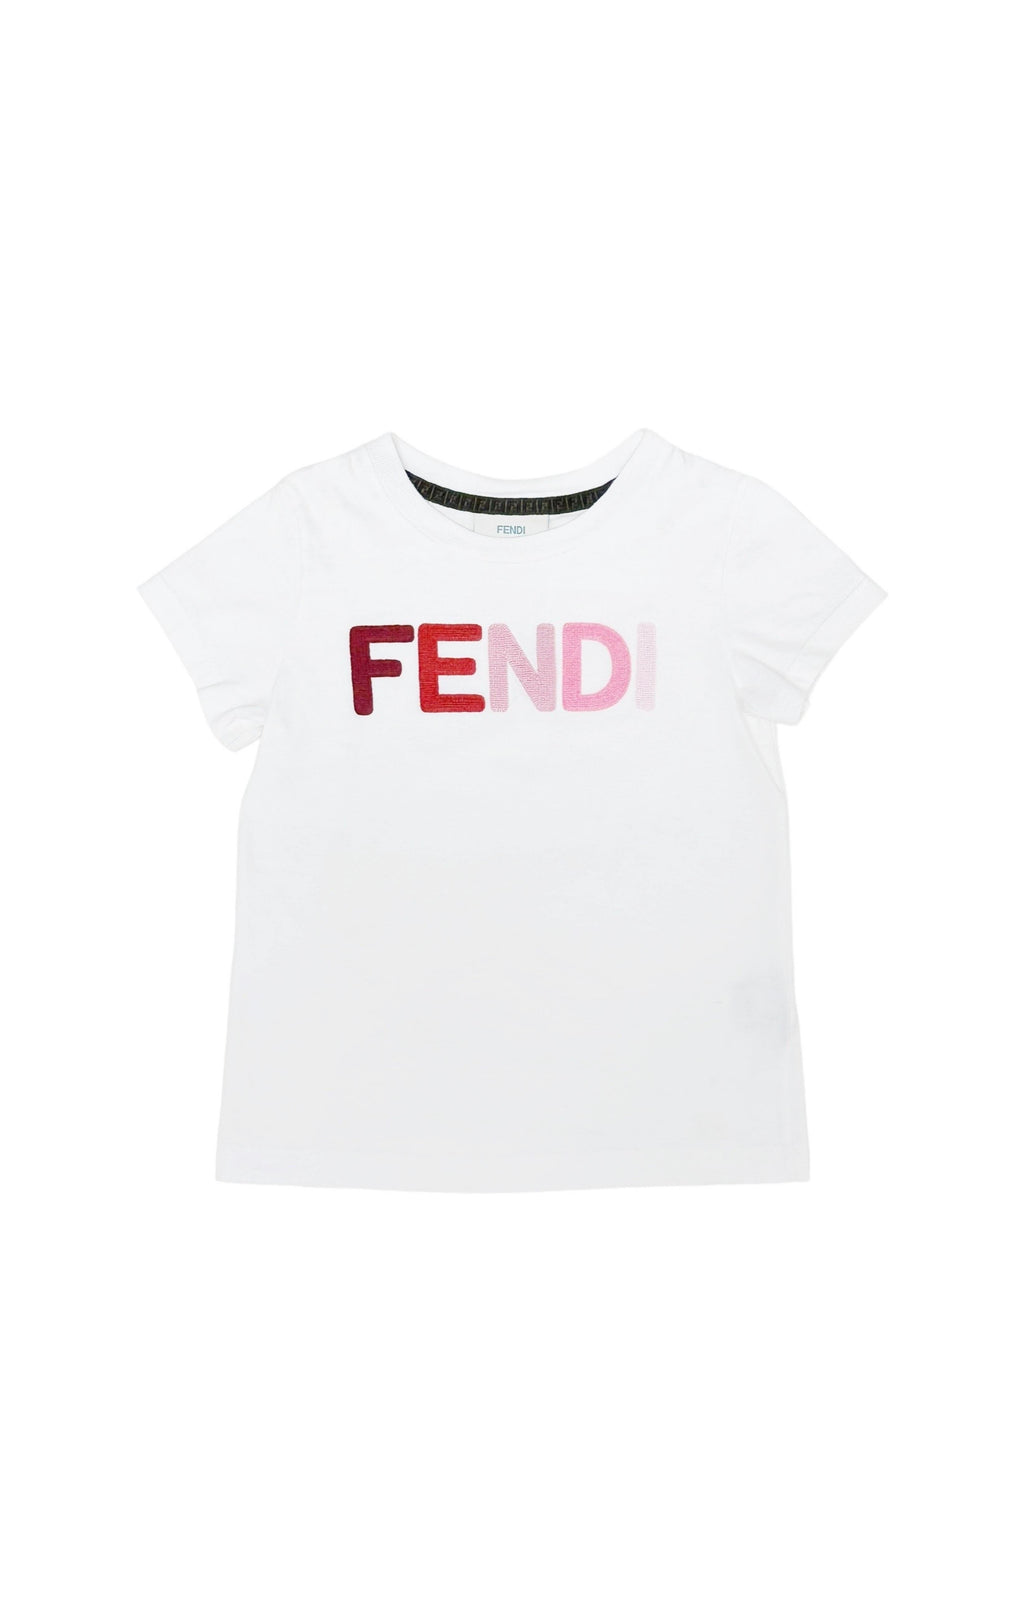 FENDI KIDS (RARE) Top Size: 4 Years